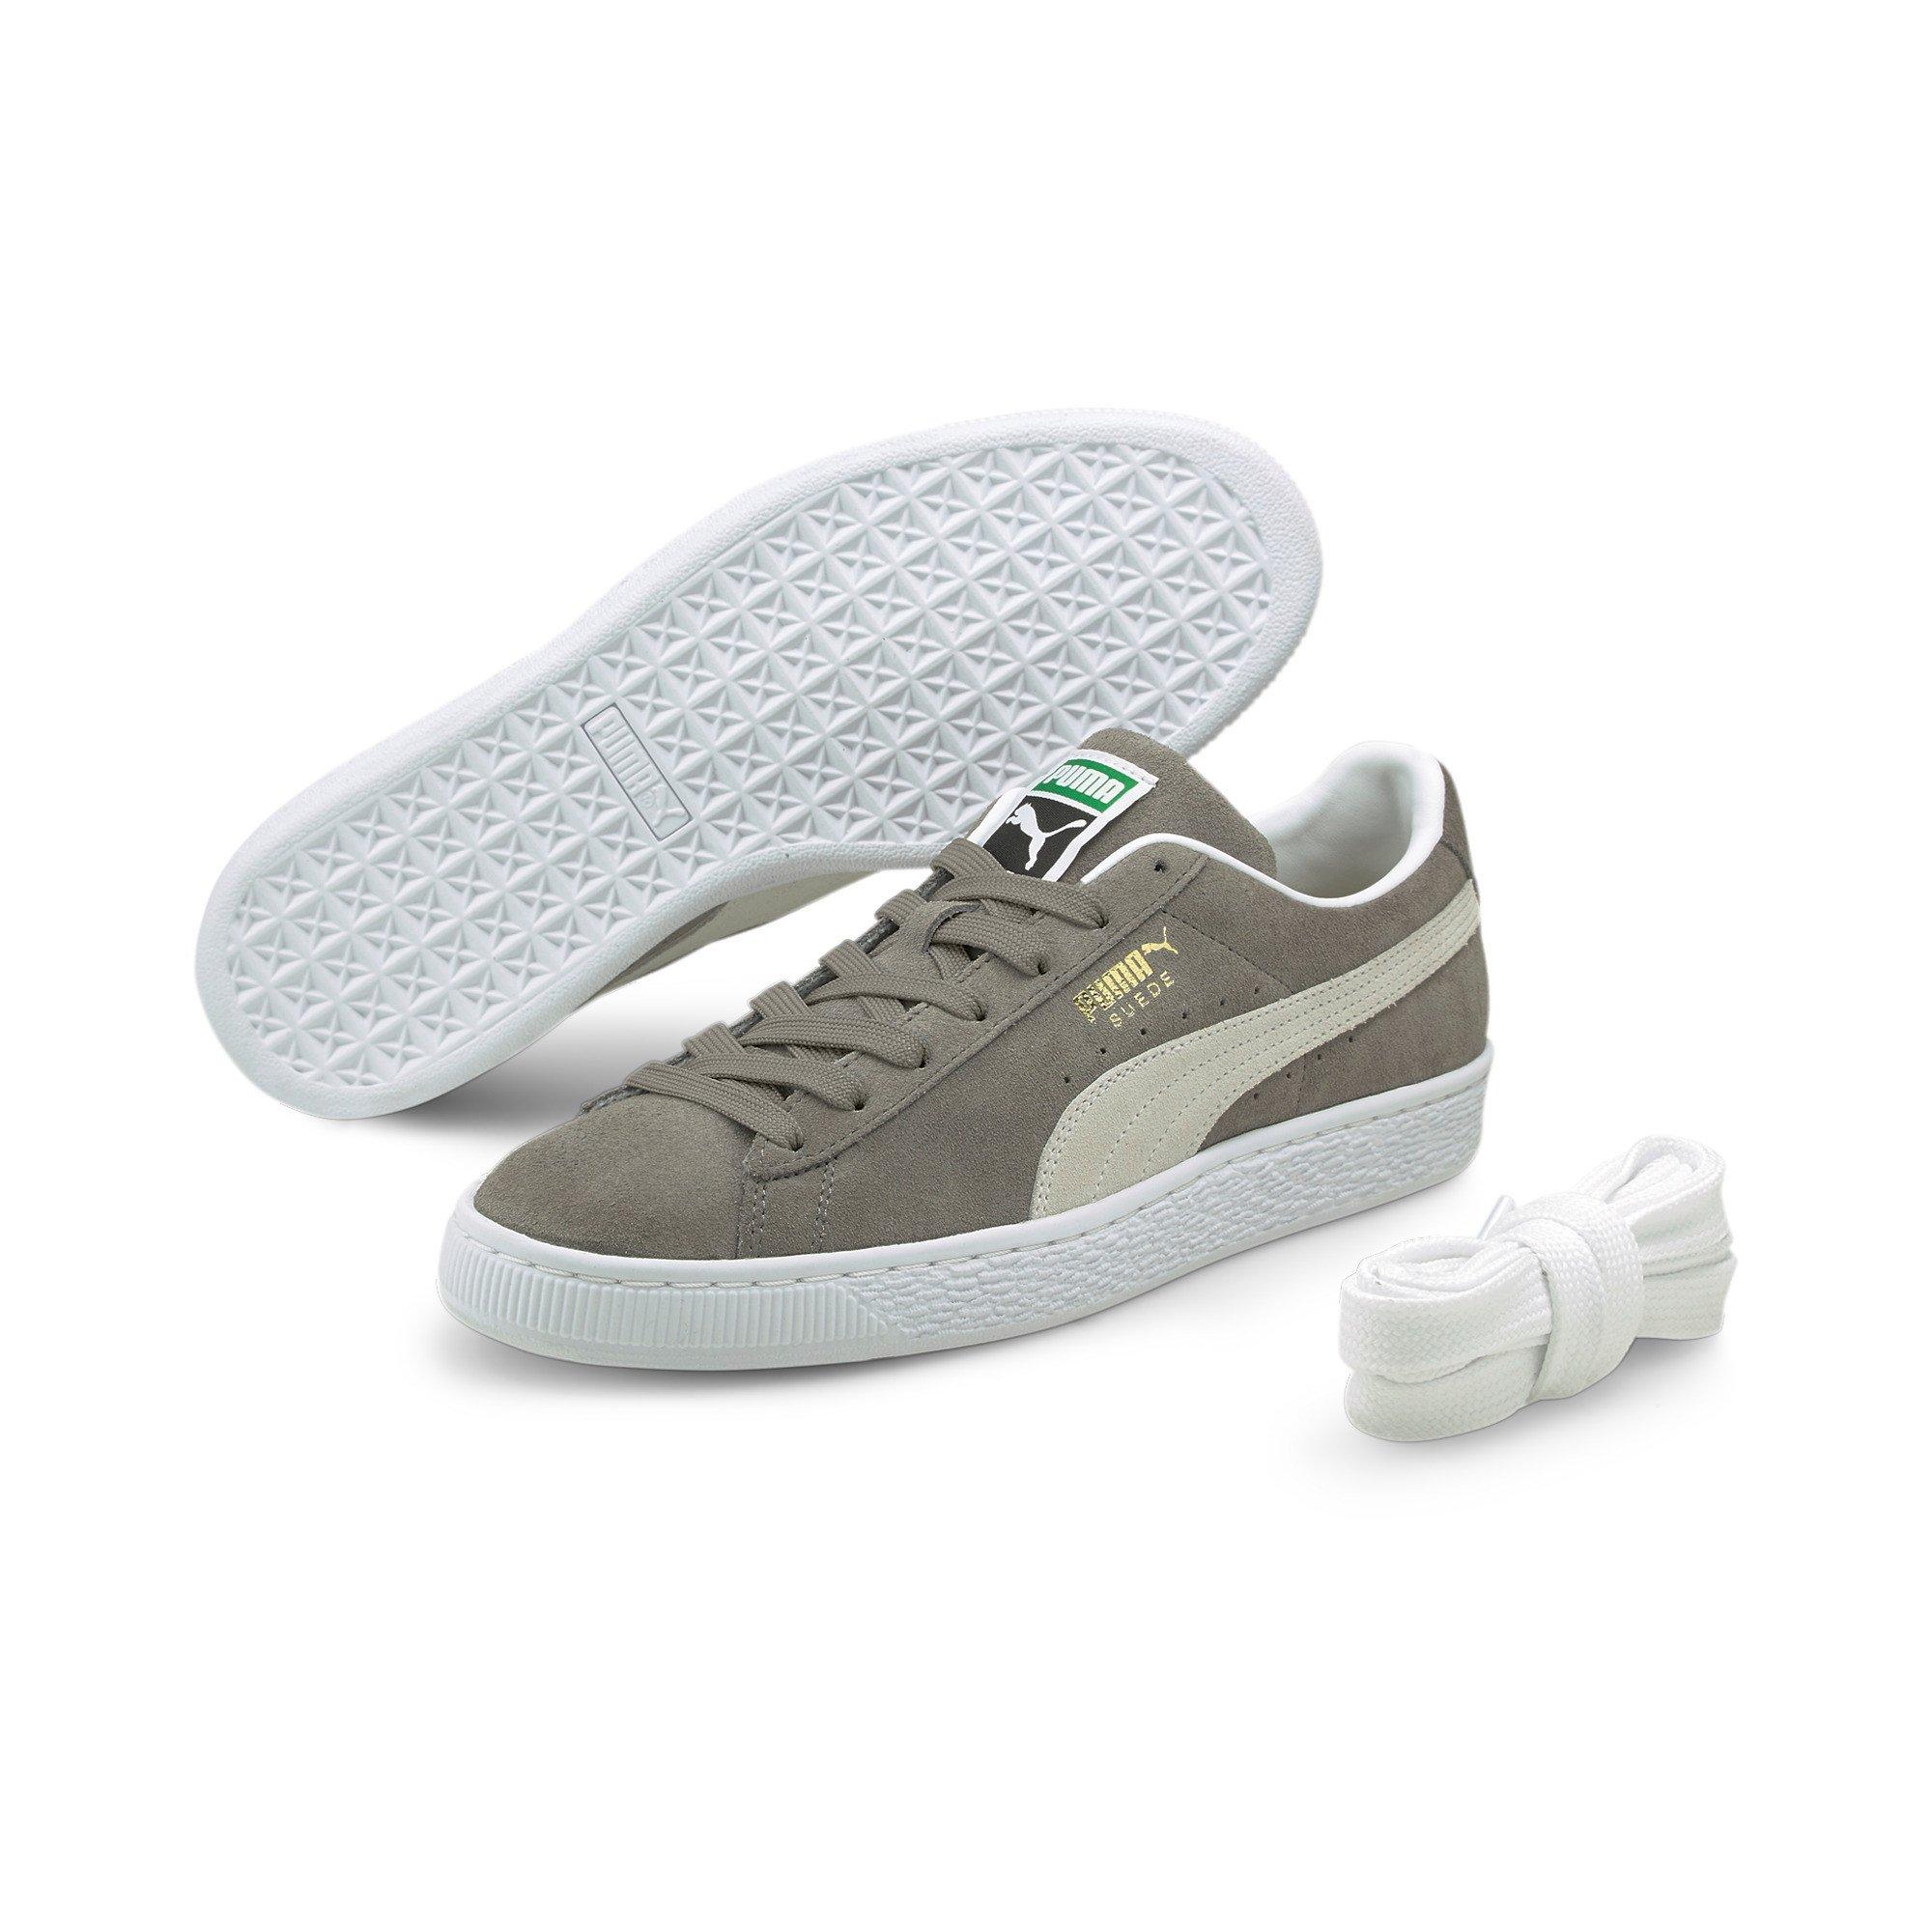 Puma Suede Classic XXI "Grey/White" Shoe